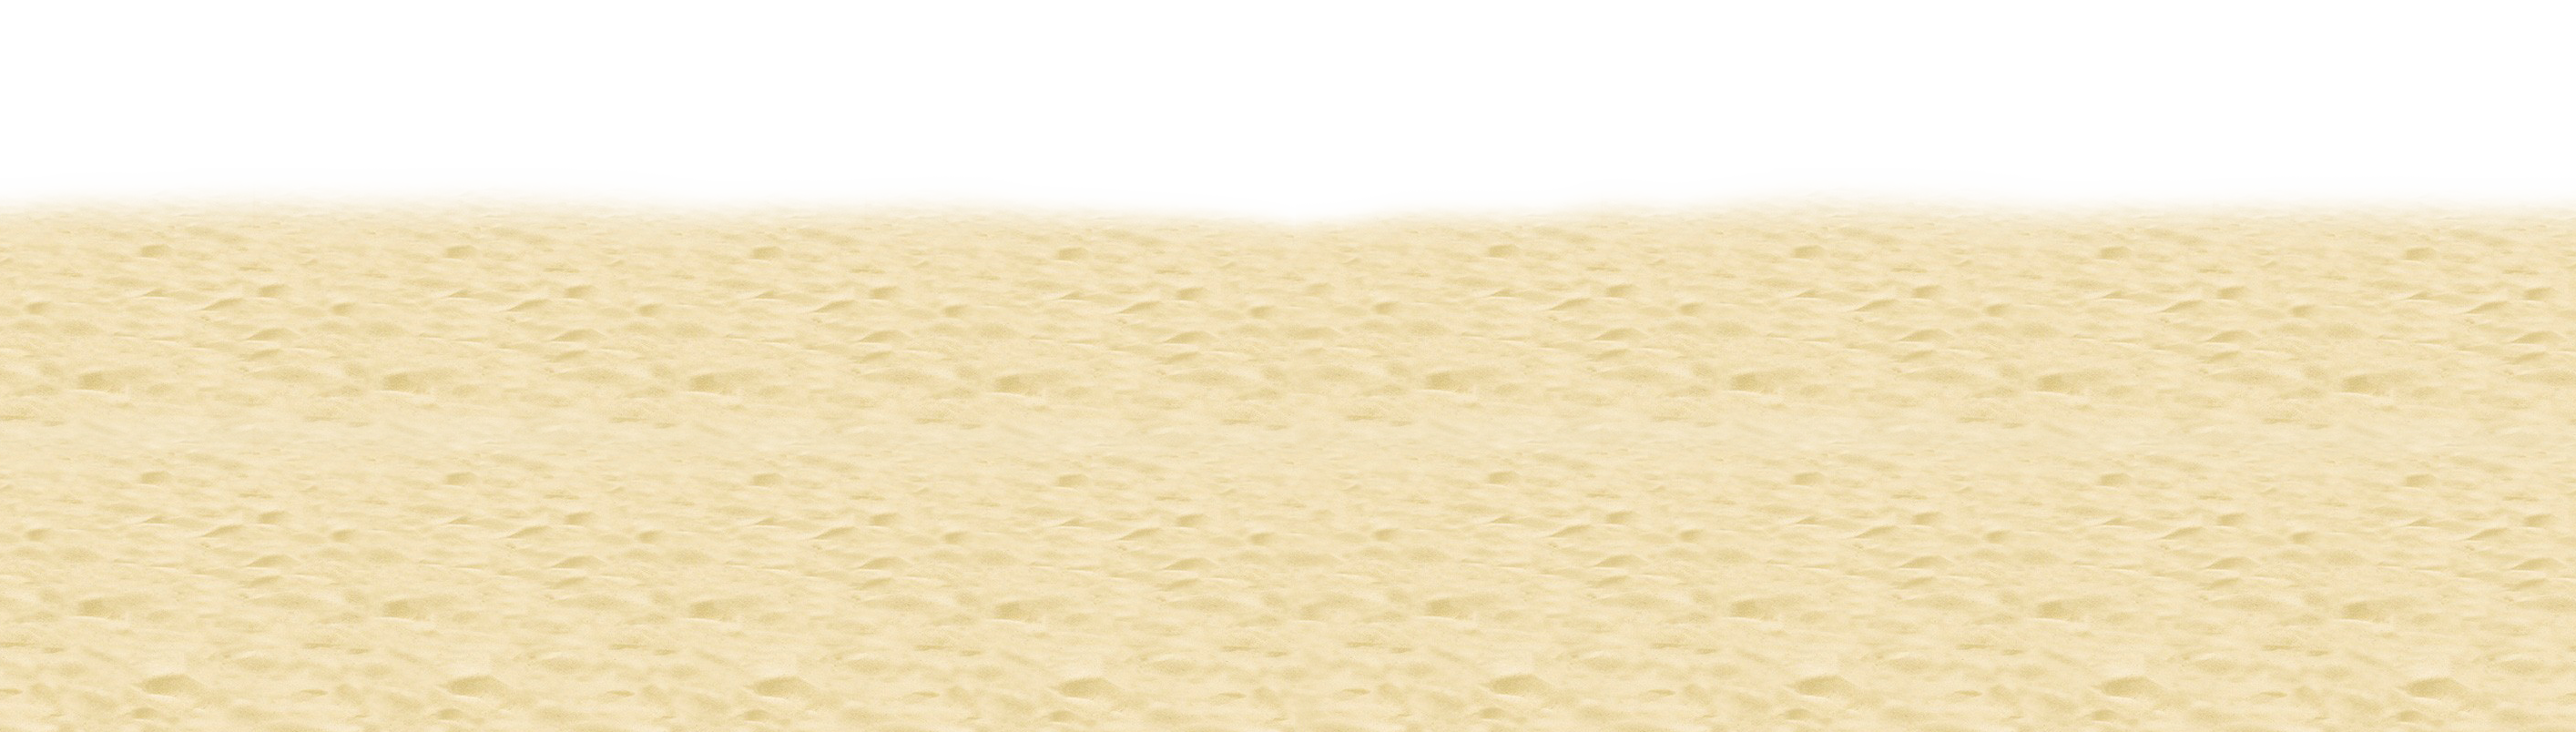 Sand transparentes Bild